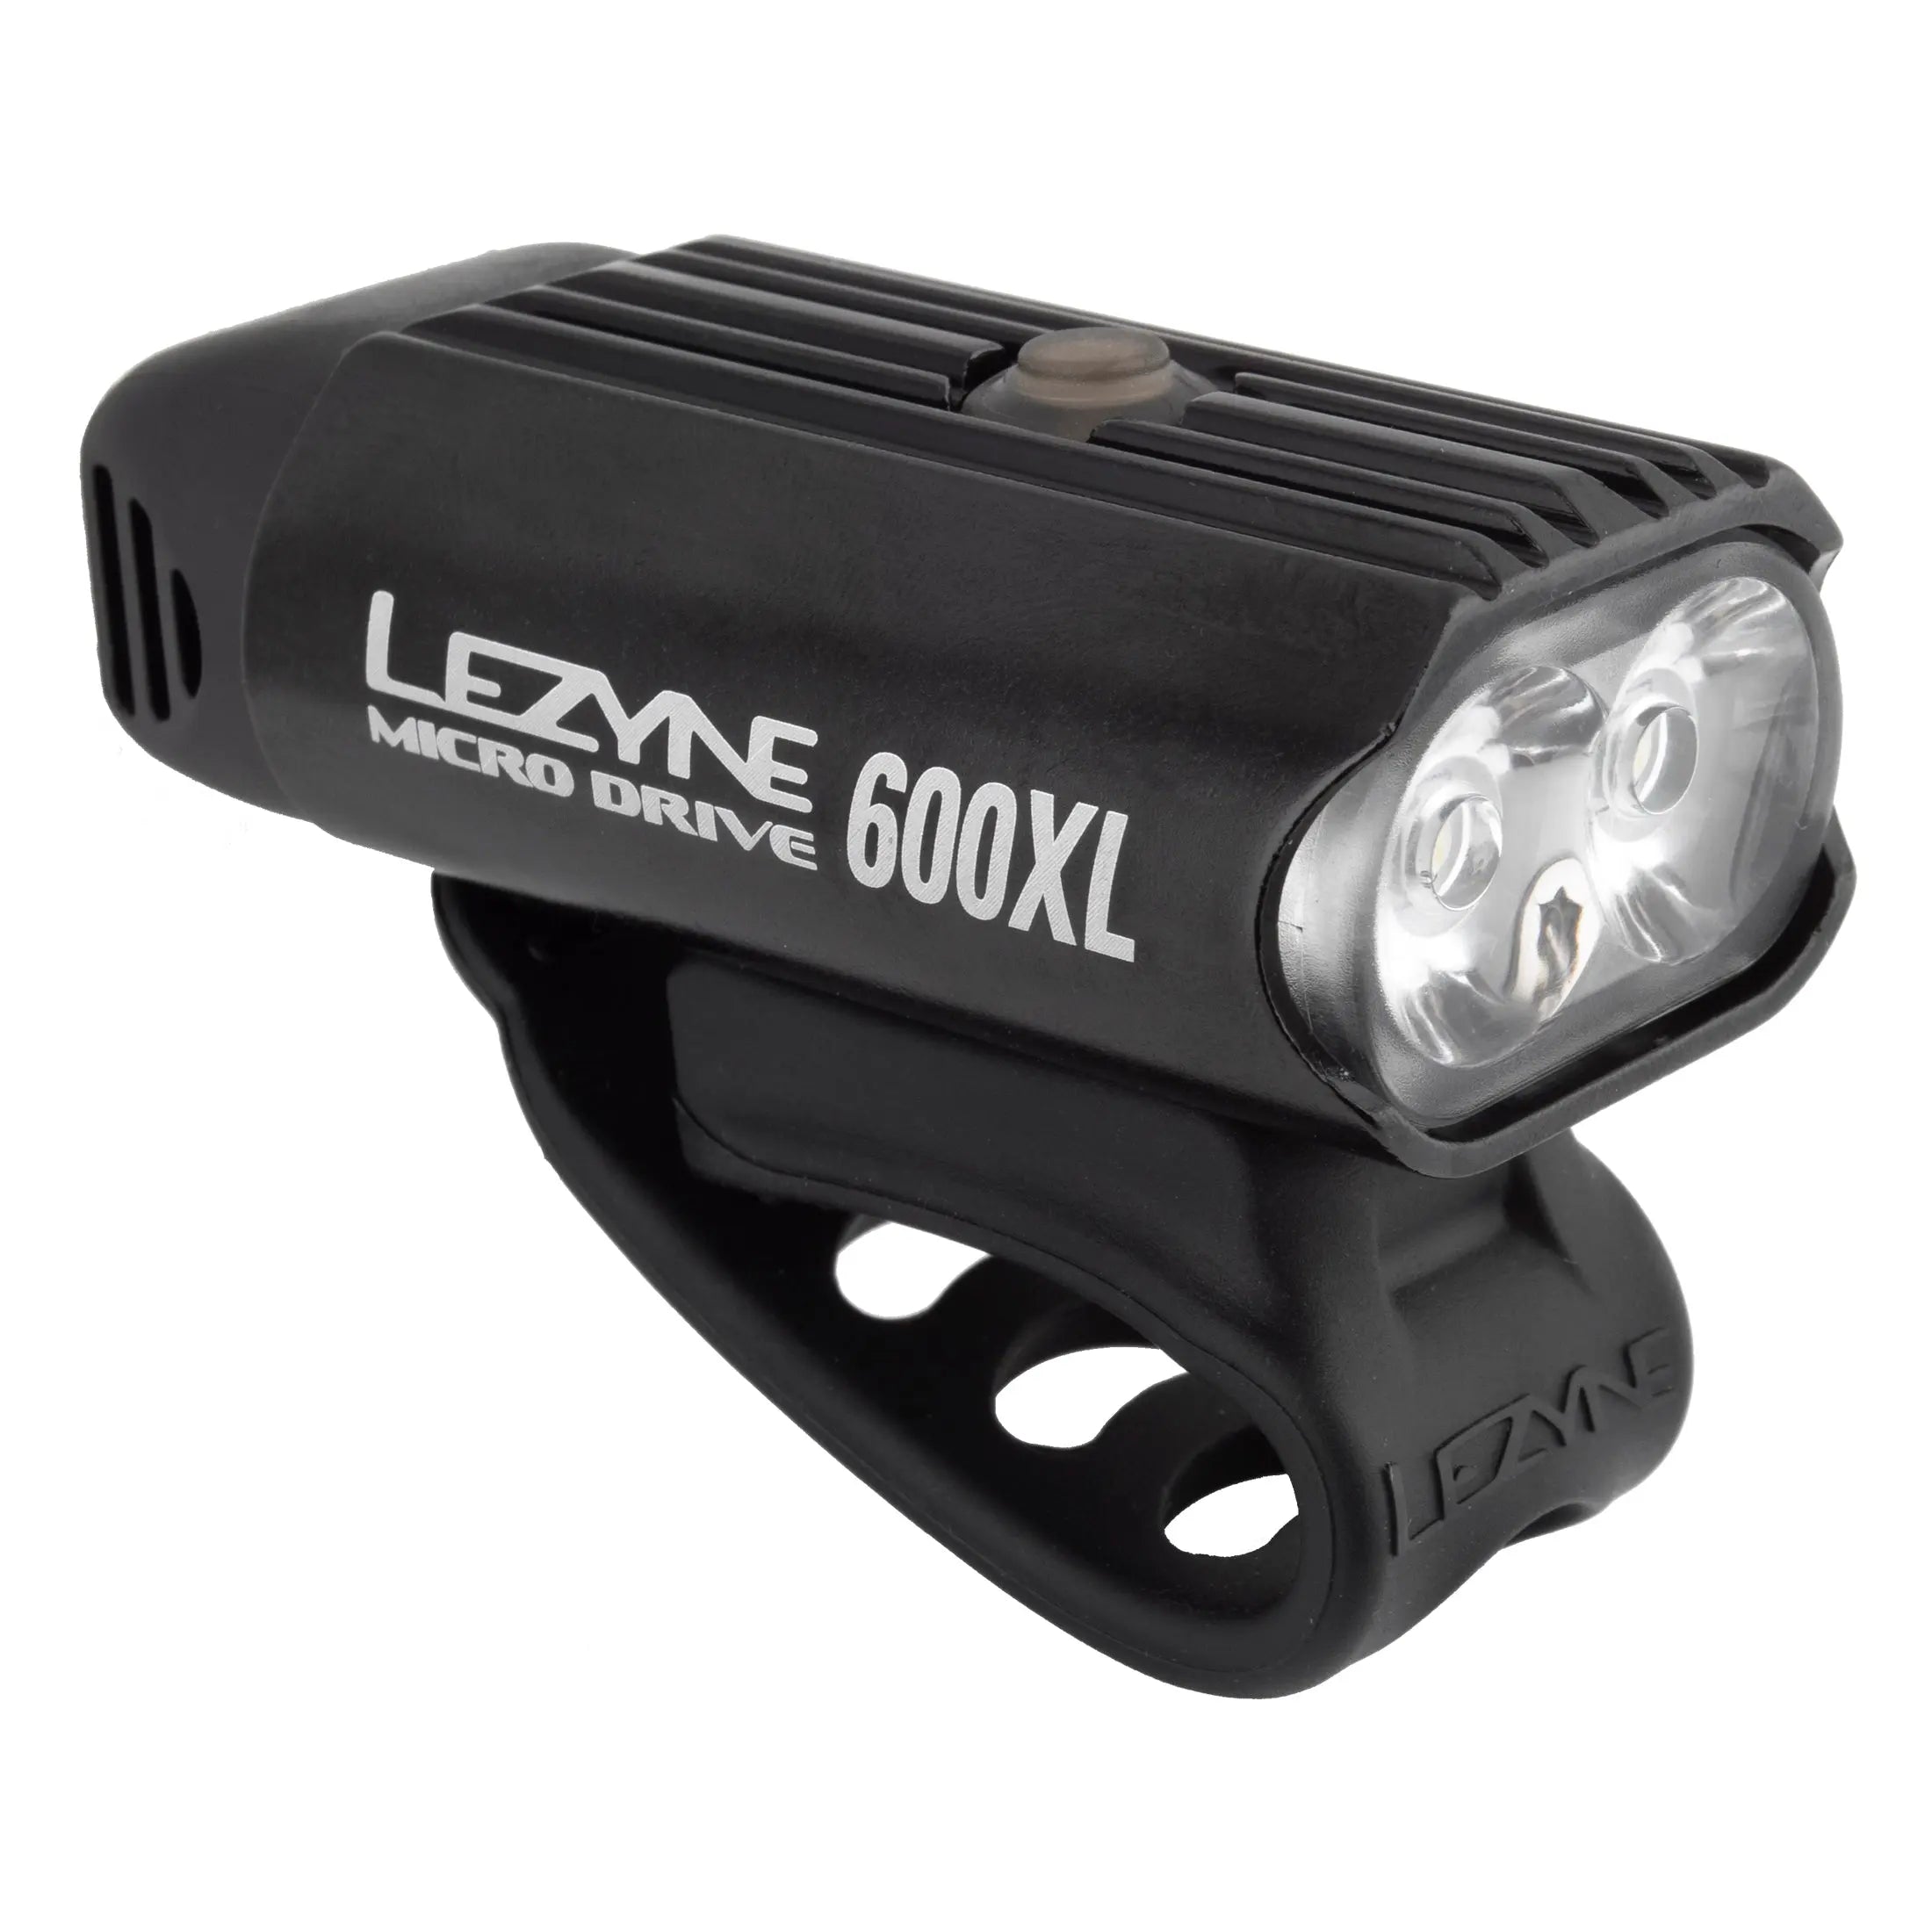 Lezyne Micro Drive 600XL Front Light